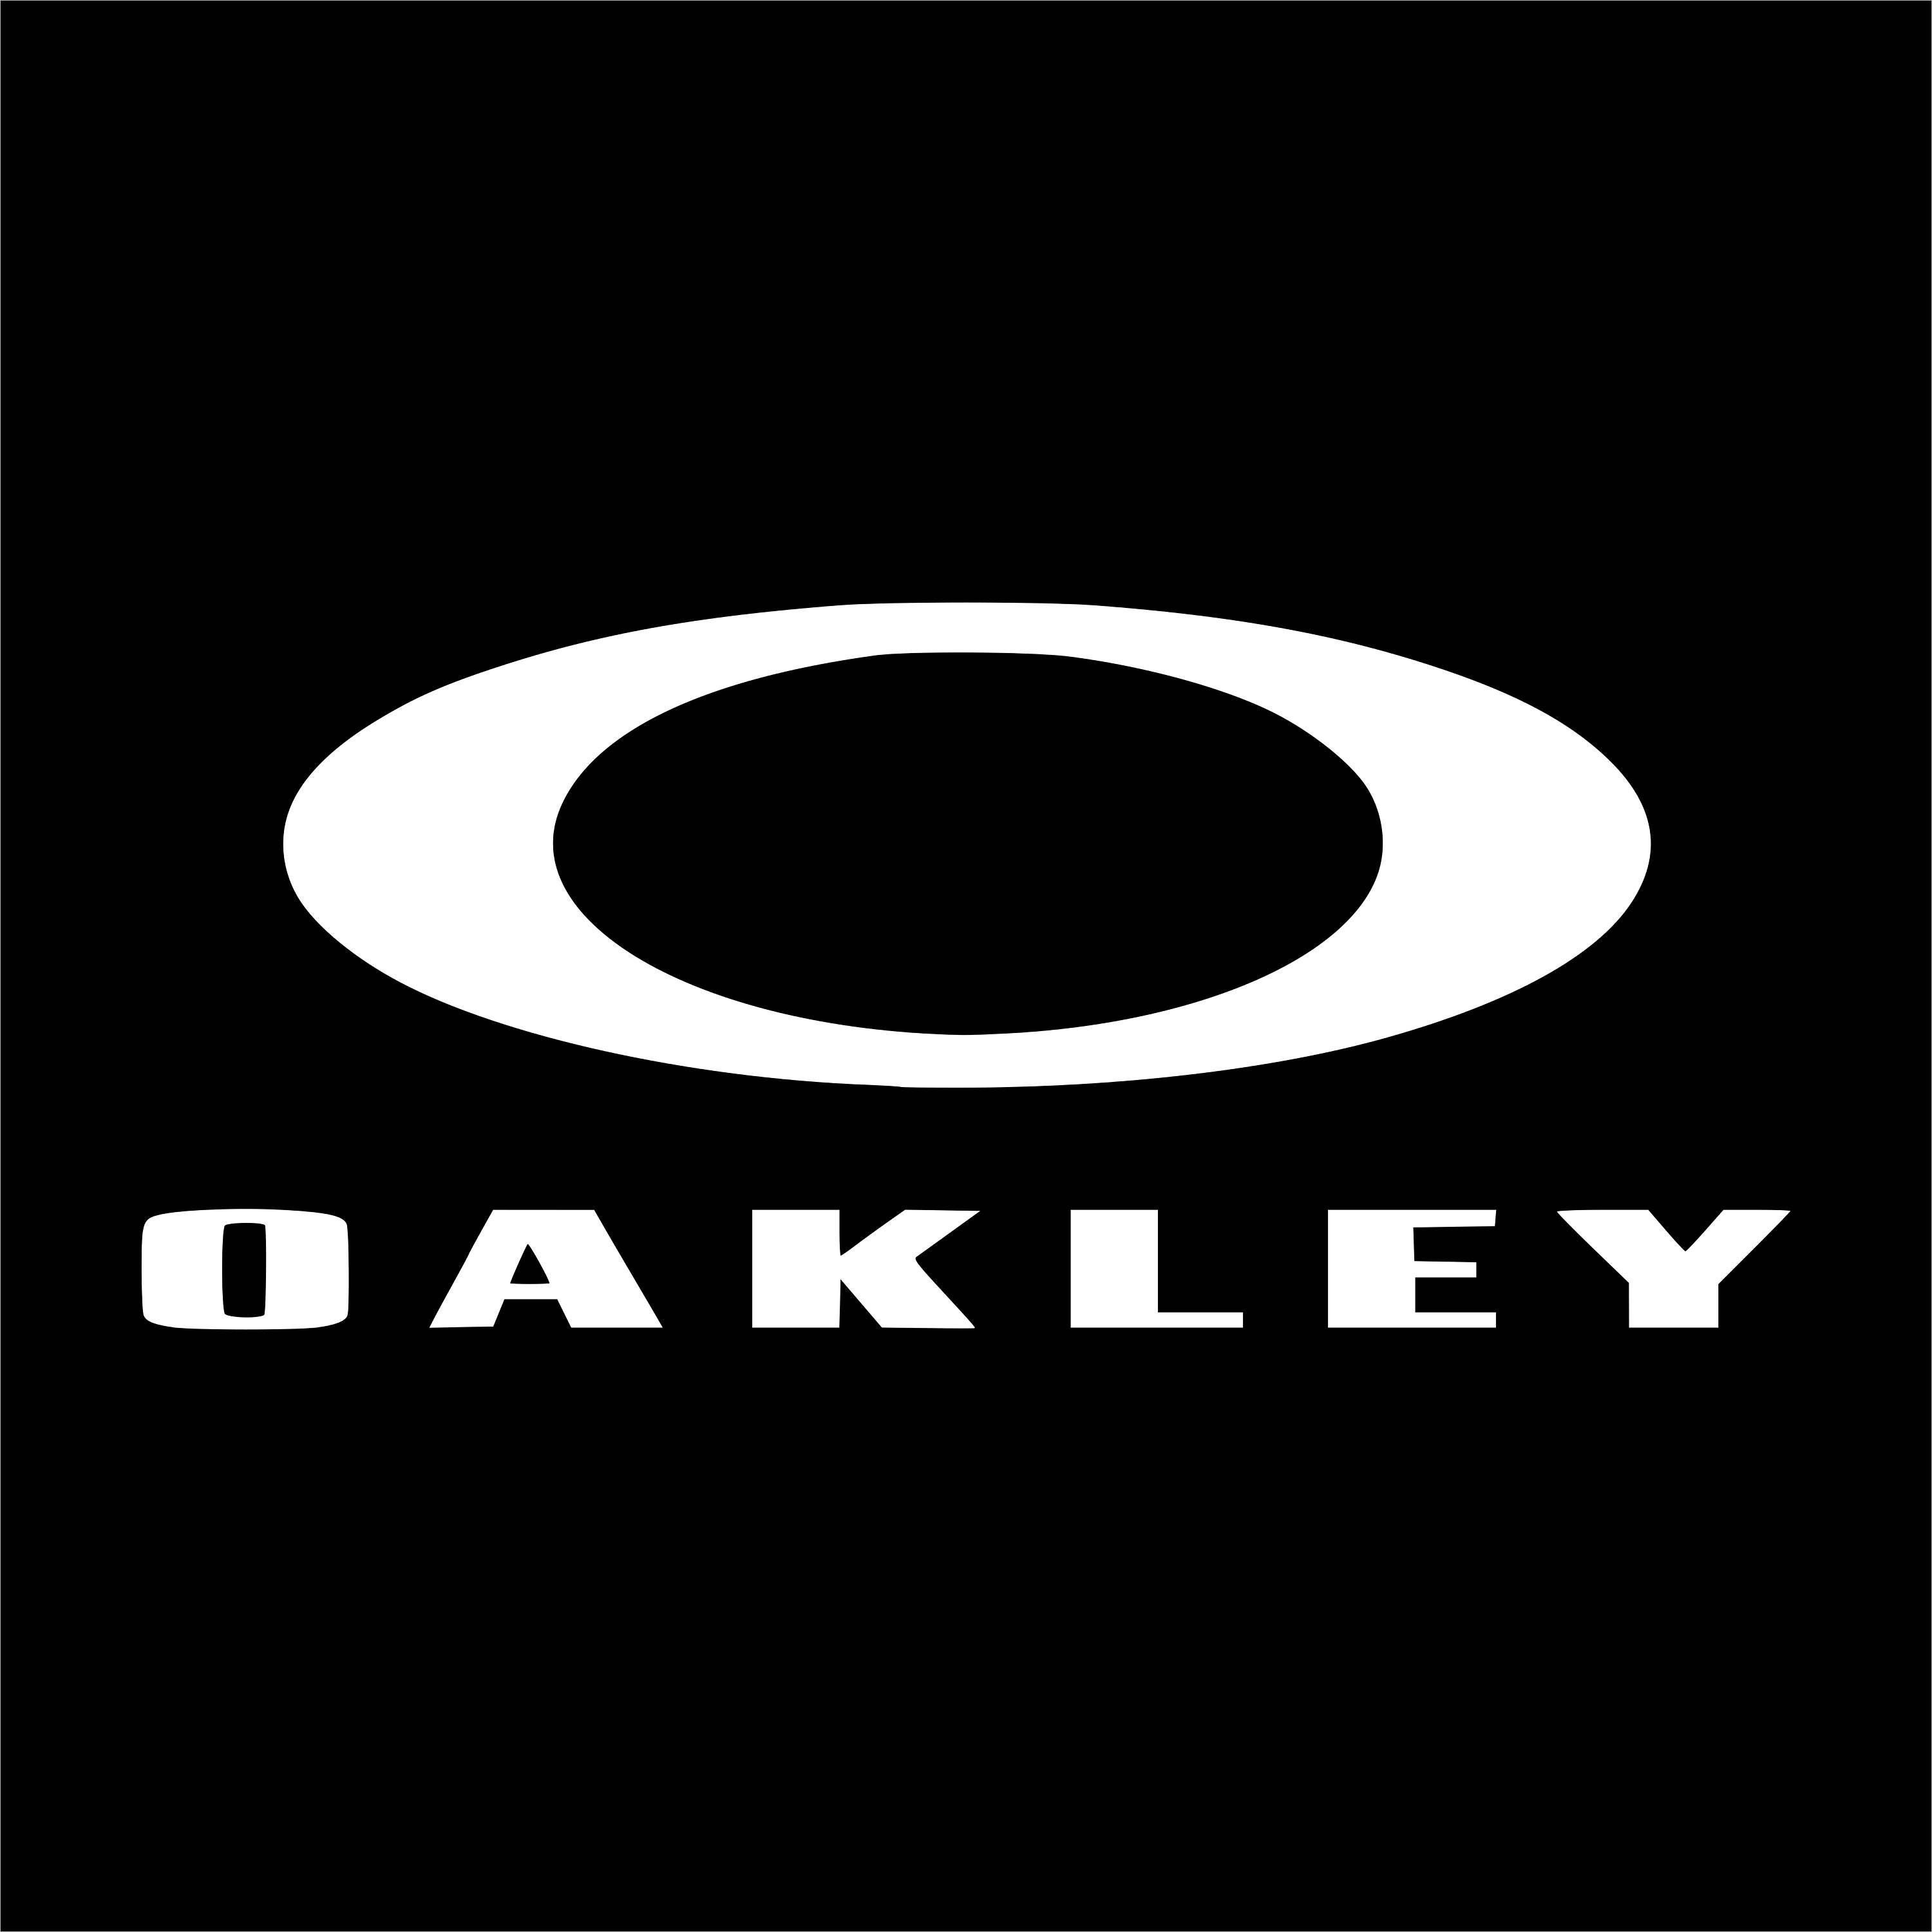 OAKLEY Logo Vinyl Decal RTIC Tumbler Yeti Rambler Car Truck